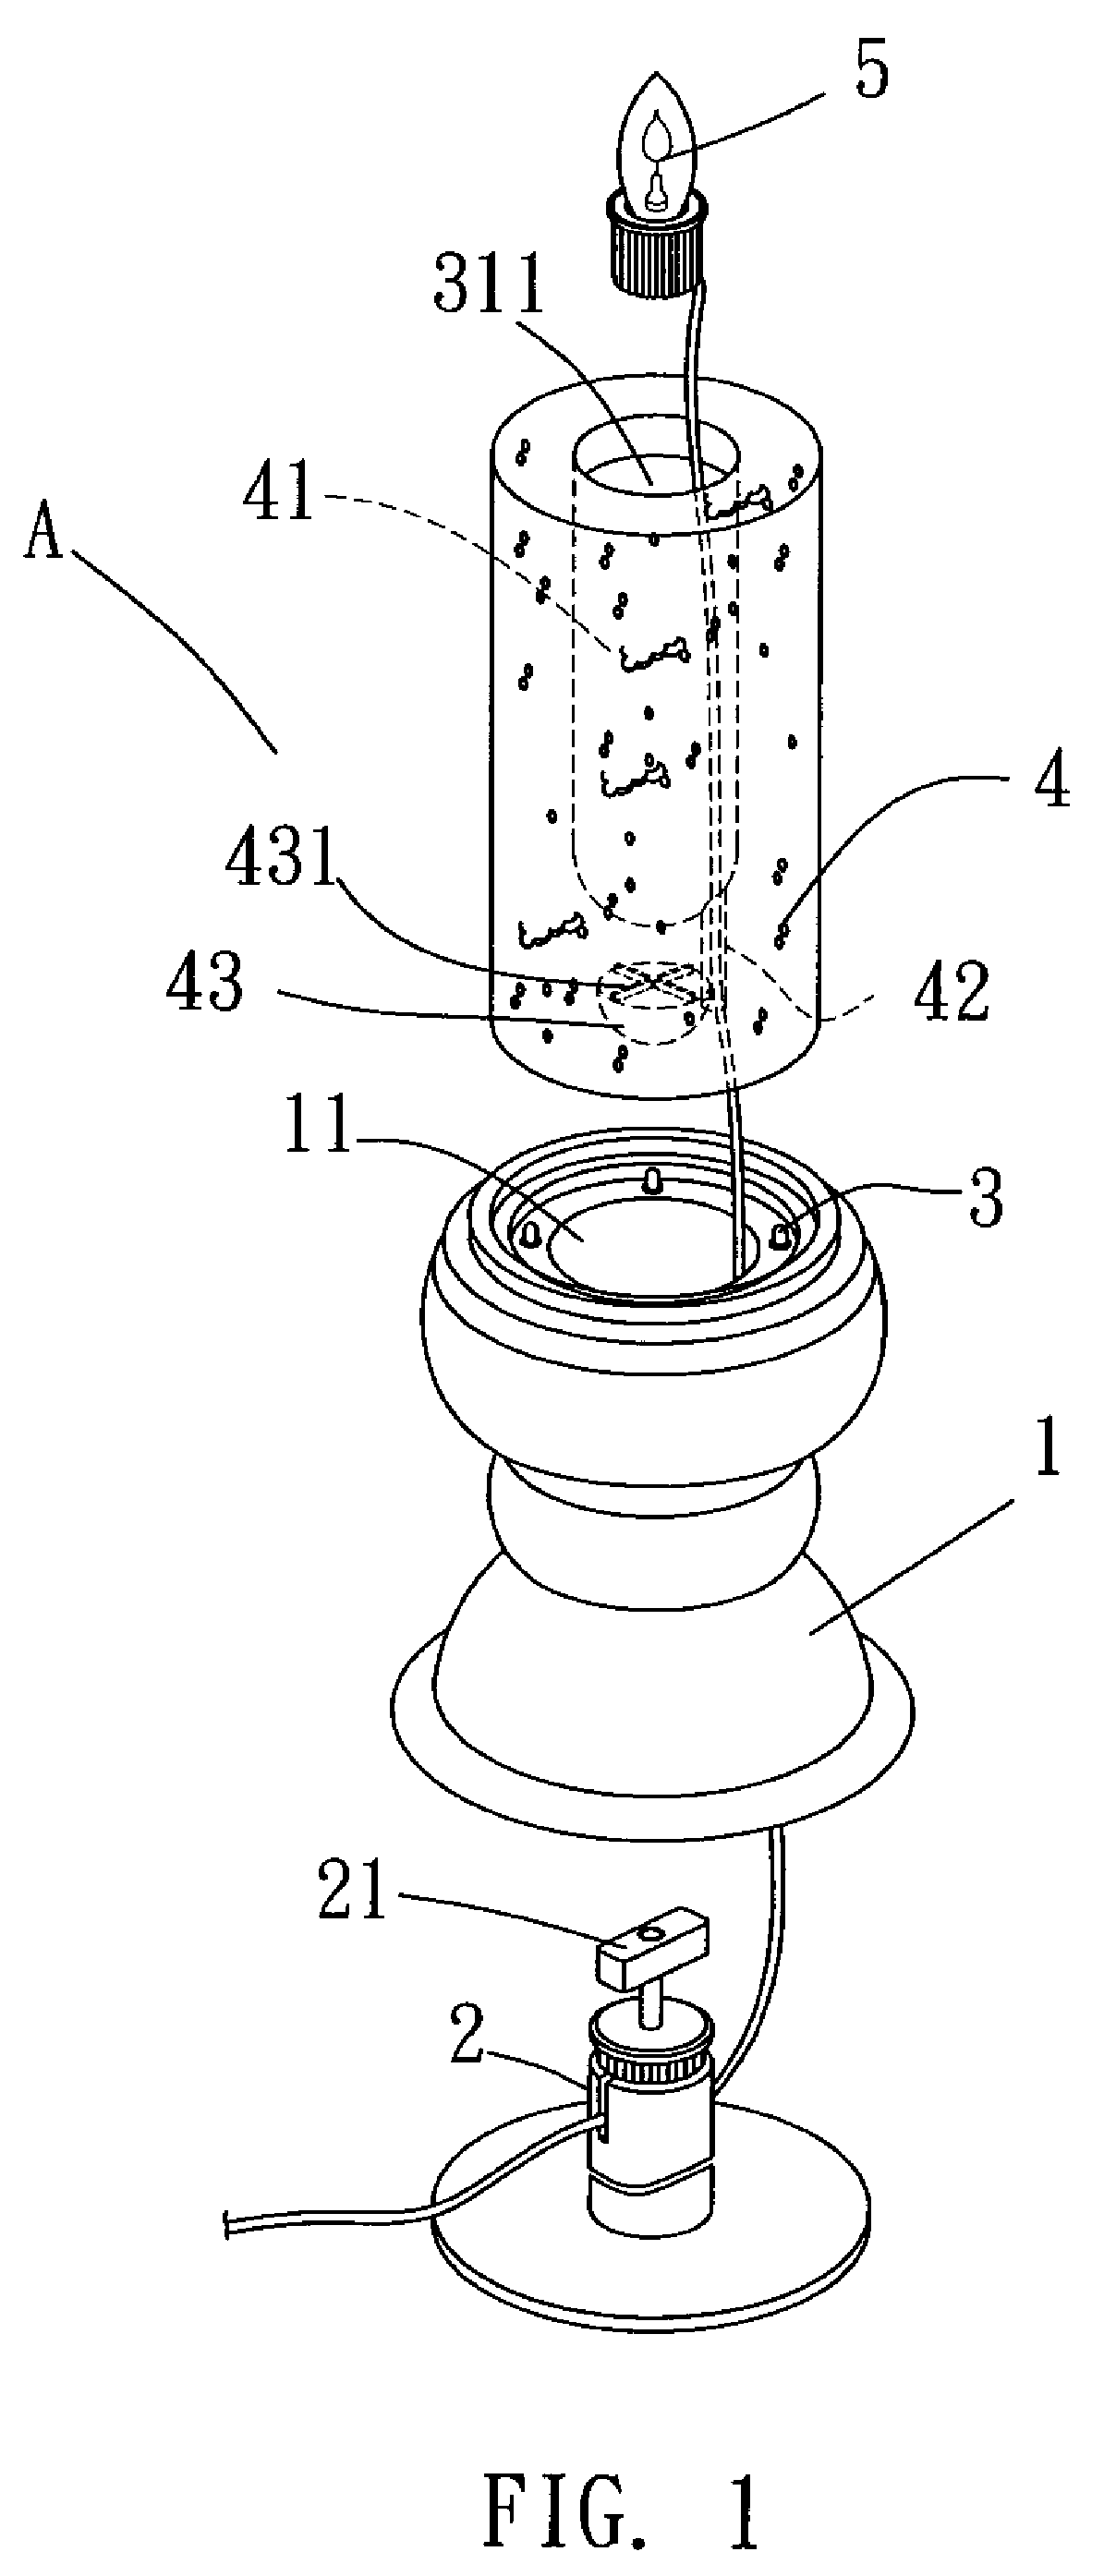 Whirlpool type aqua-lamp-based candle-like lighting device